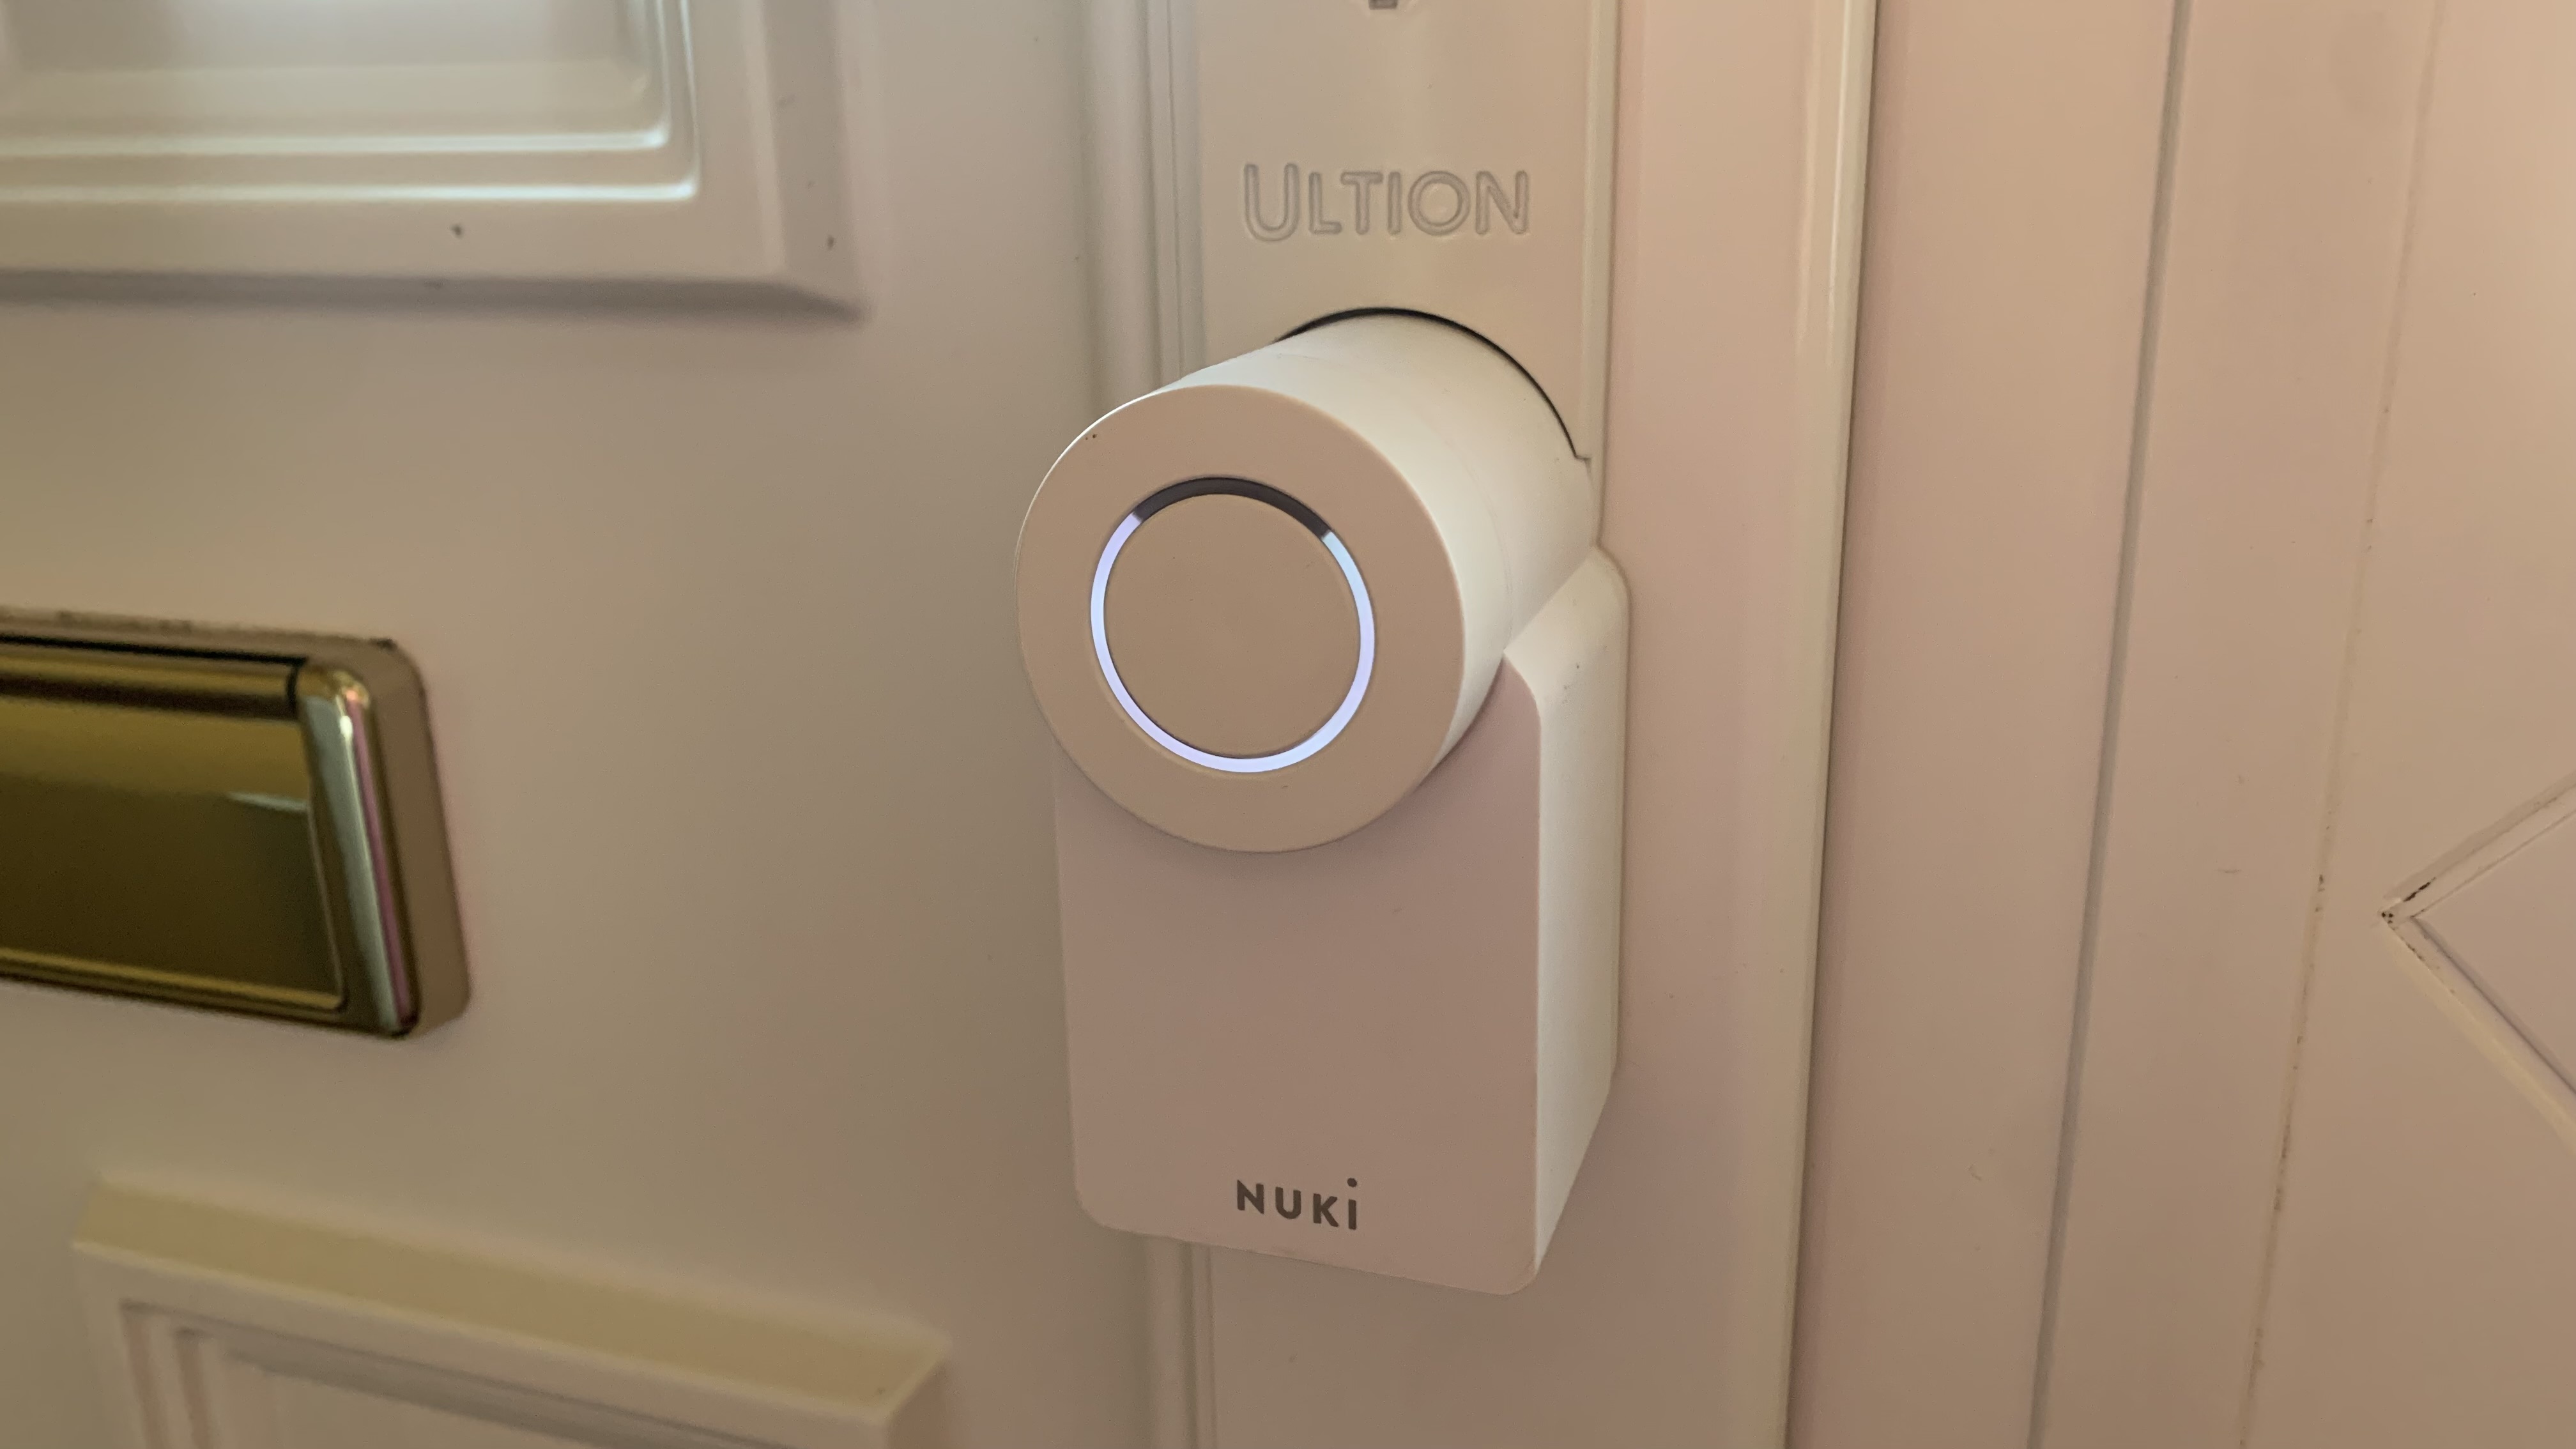 Ultion Nuki smart lock review: a UK-ready smart lock